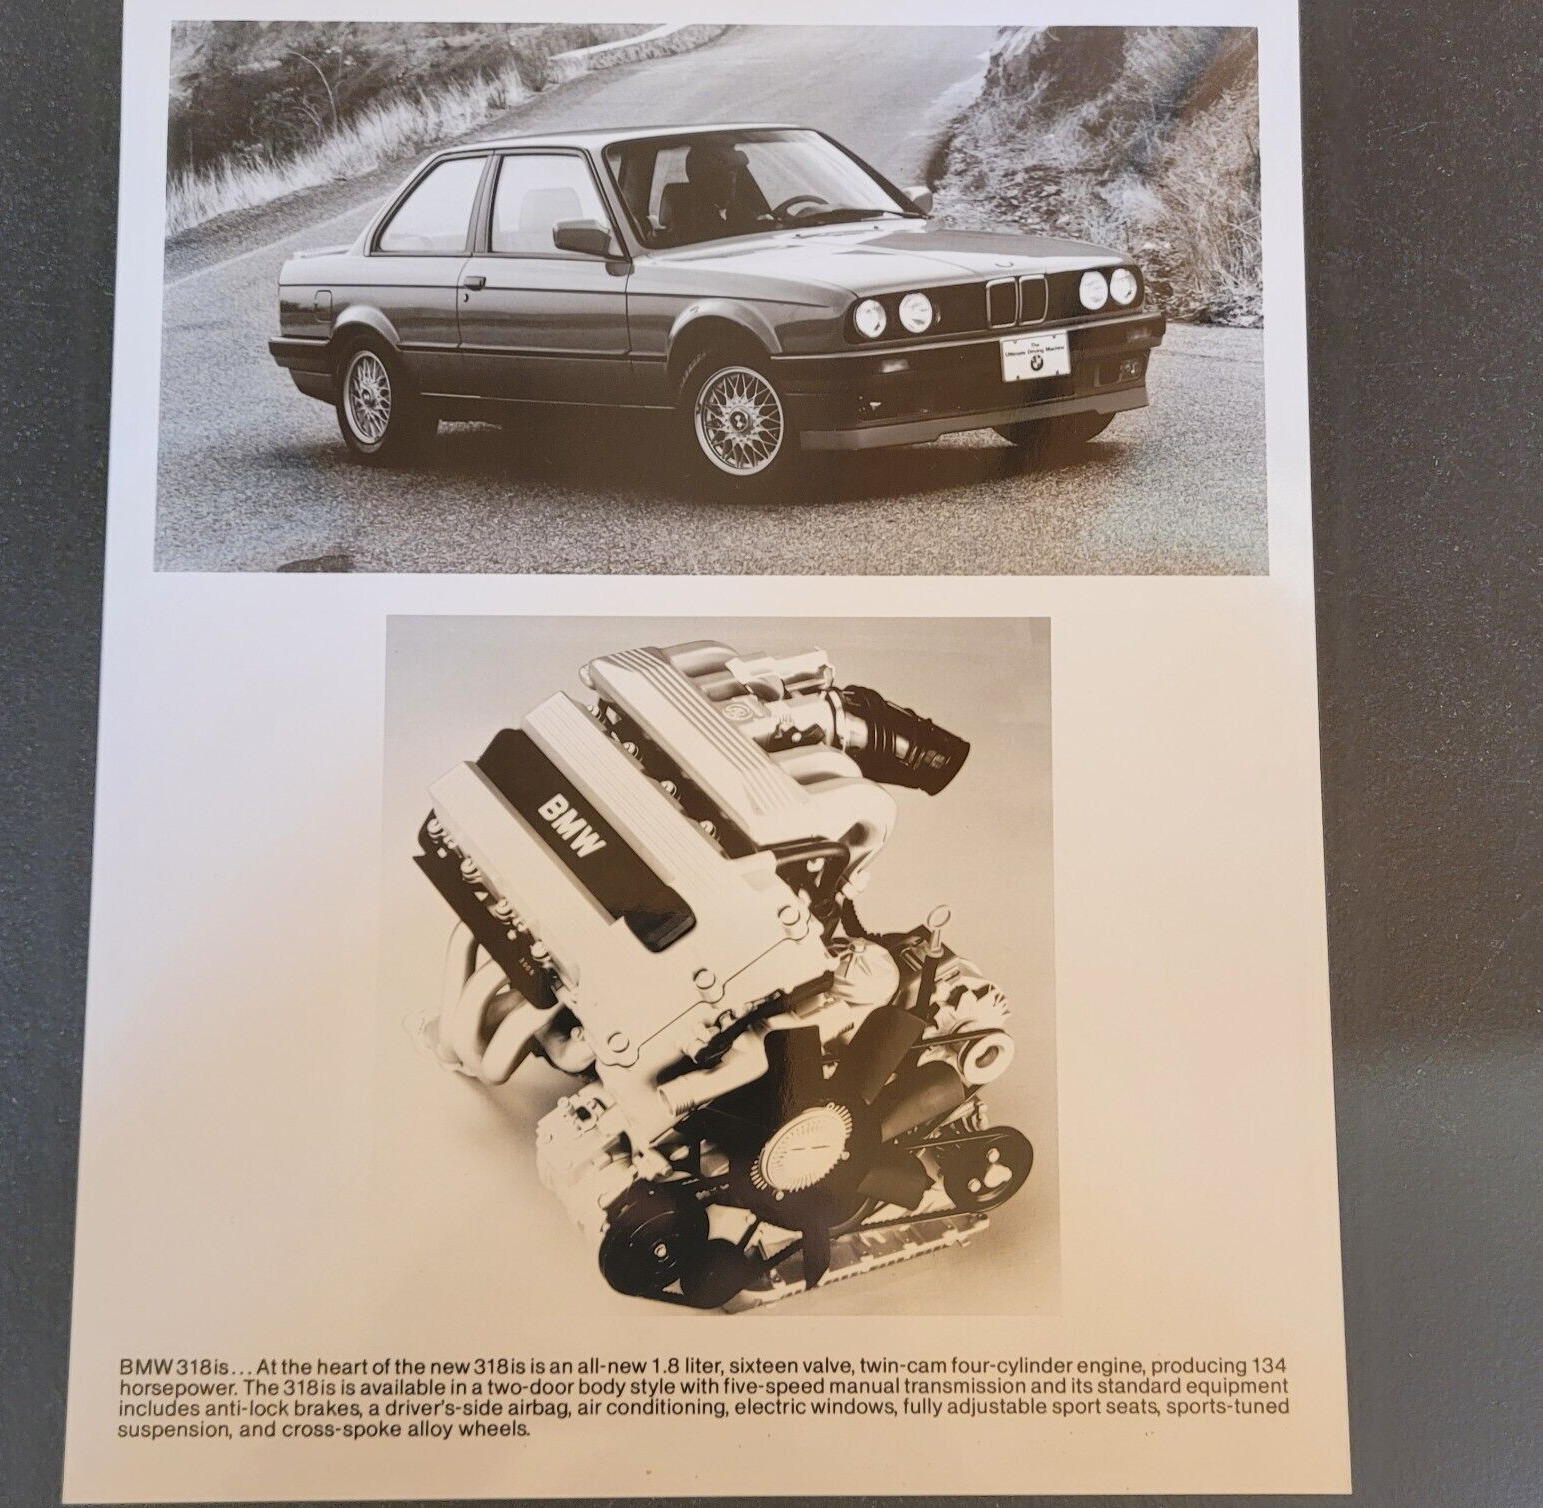 BMW 318is Model Dealer Media Information Press Photo Black and White